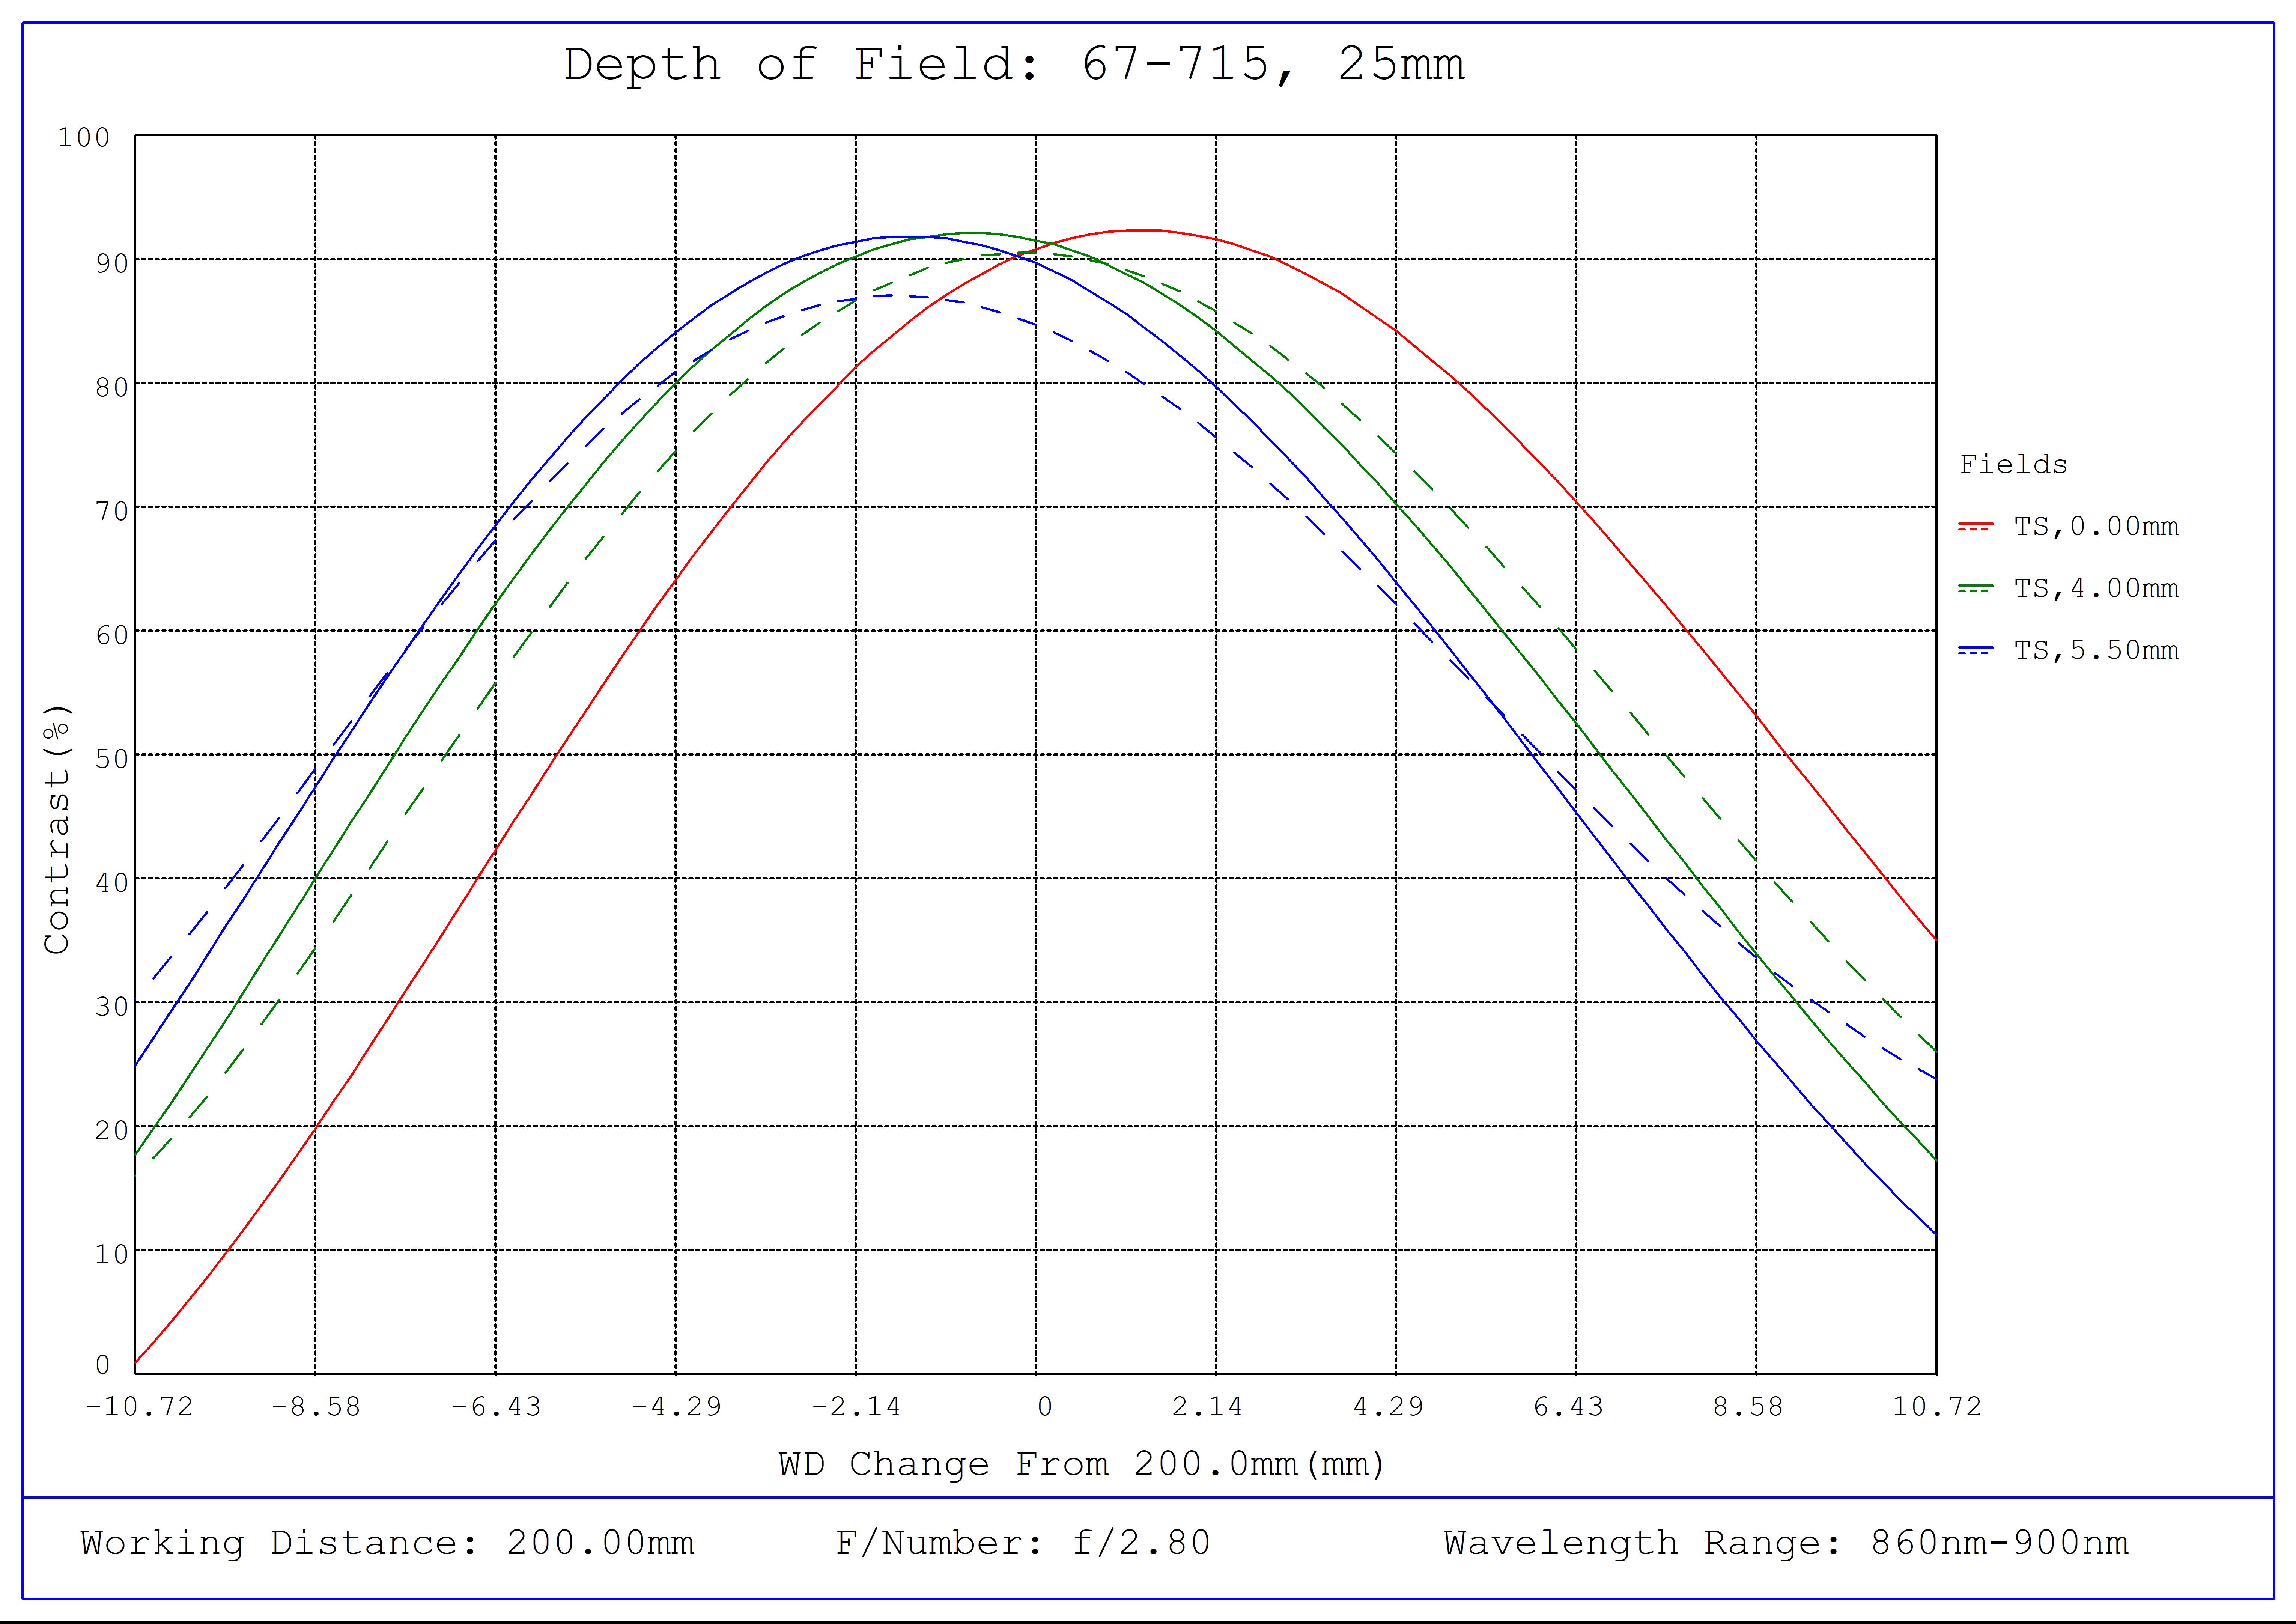 #67-715, 25mm C VIS-NIR Series Fixed Focal Length Lens, Depth of Field Plot (NIR), 200mm Working Distance, f2.8